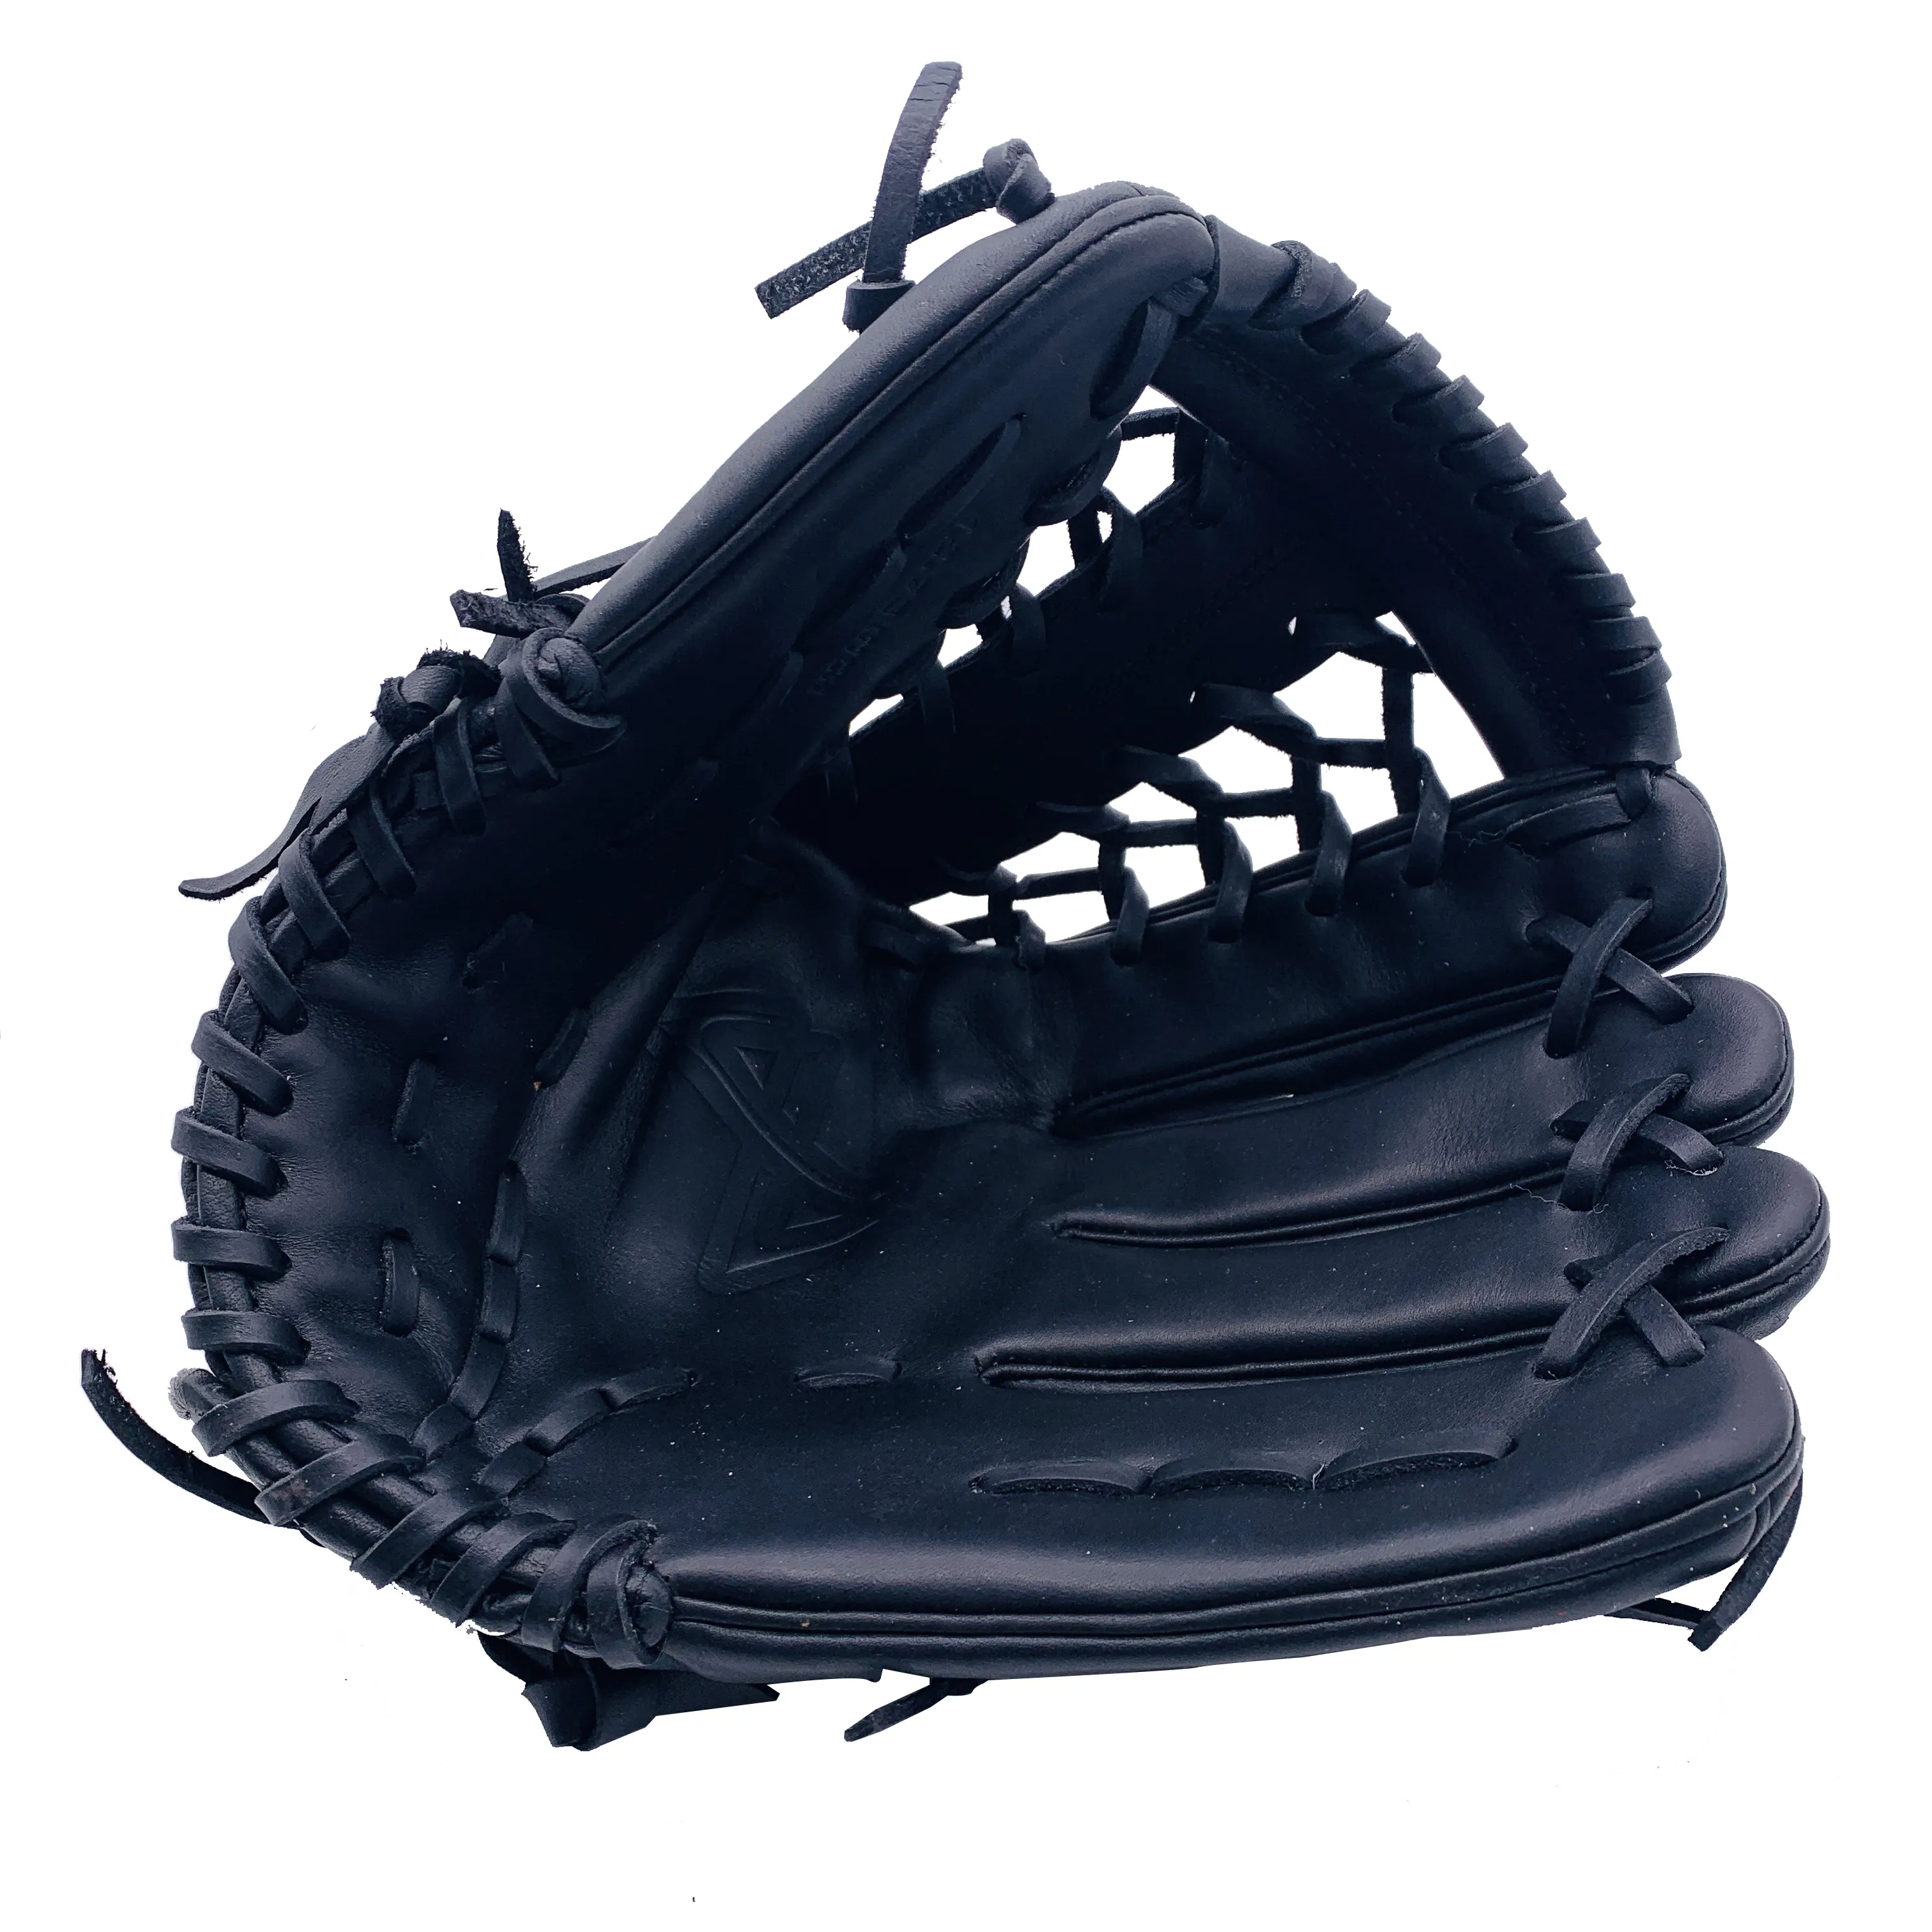 Vente en gros de gants de baseball en cuir durables personnalisés pour adolescents gants de baseball softball